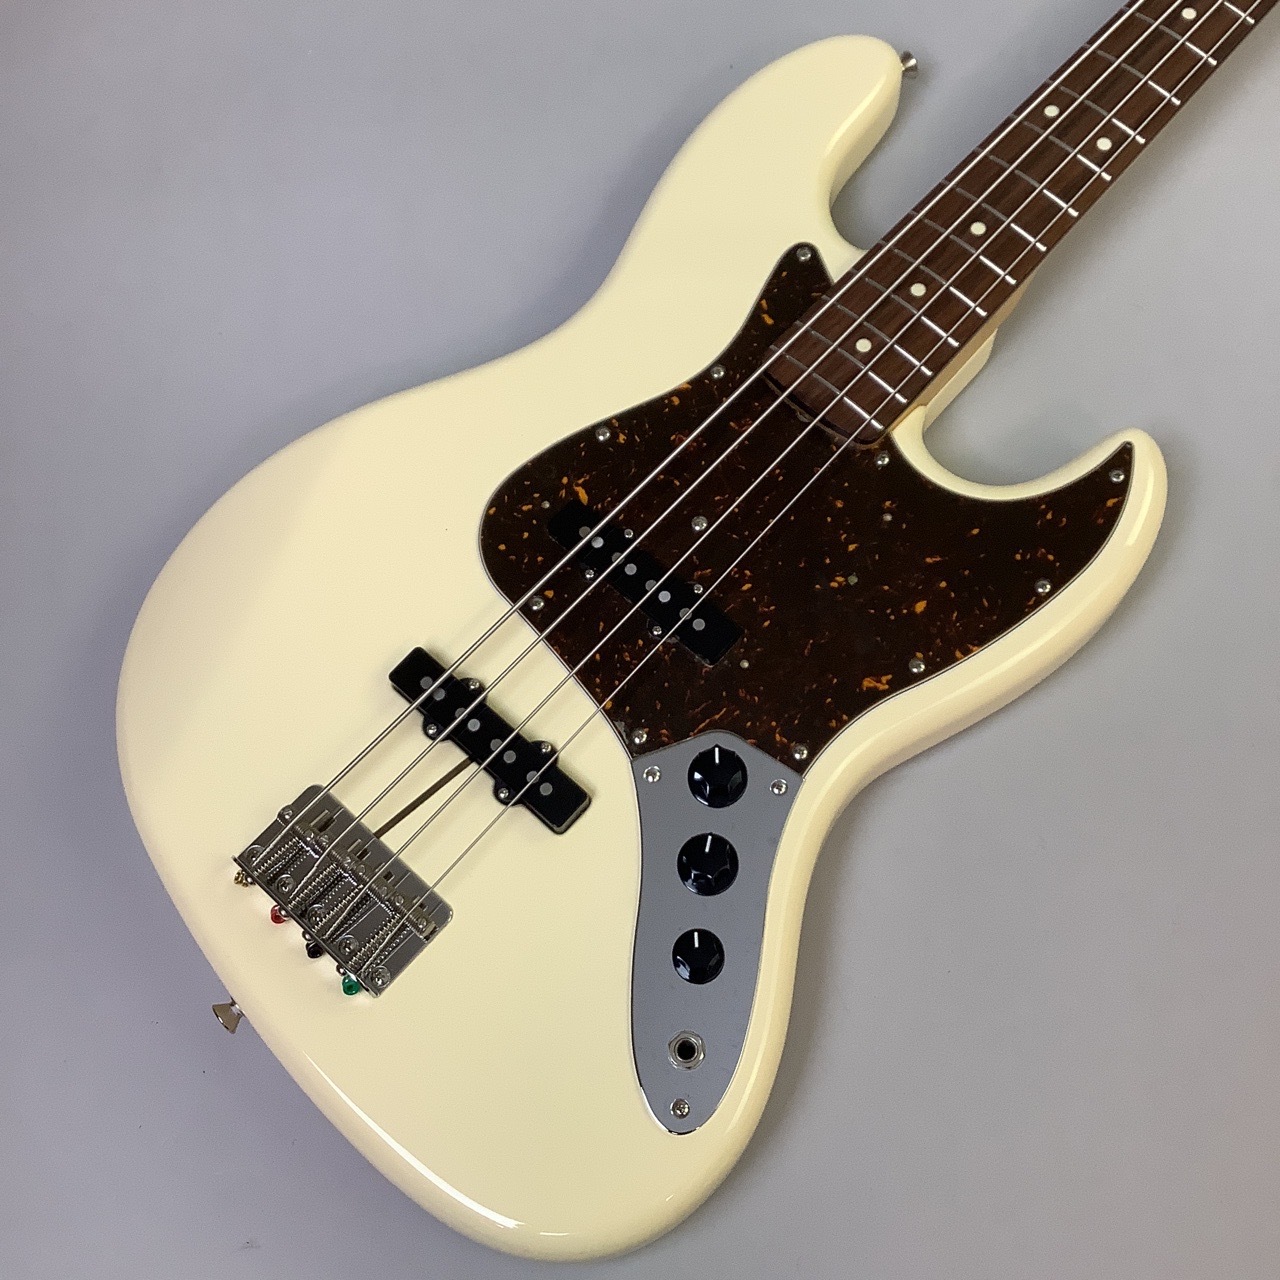 Fender Japanジャズベース上位機種「JB62-US」 | kingsvillelawyer.com